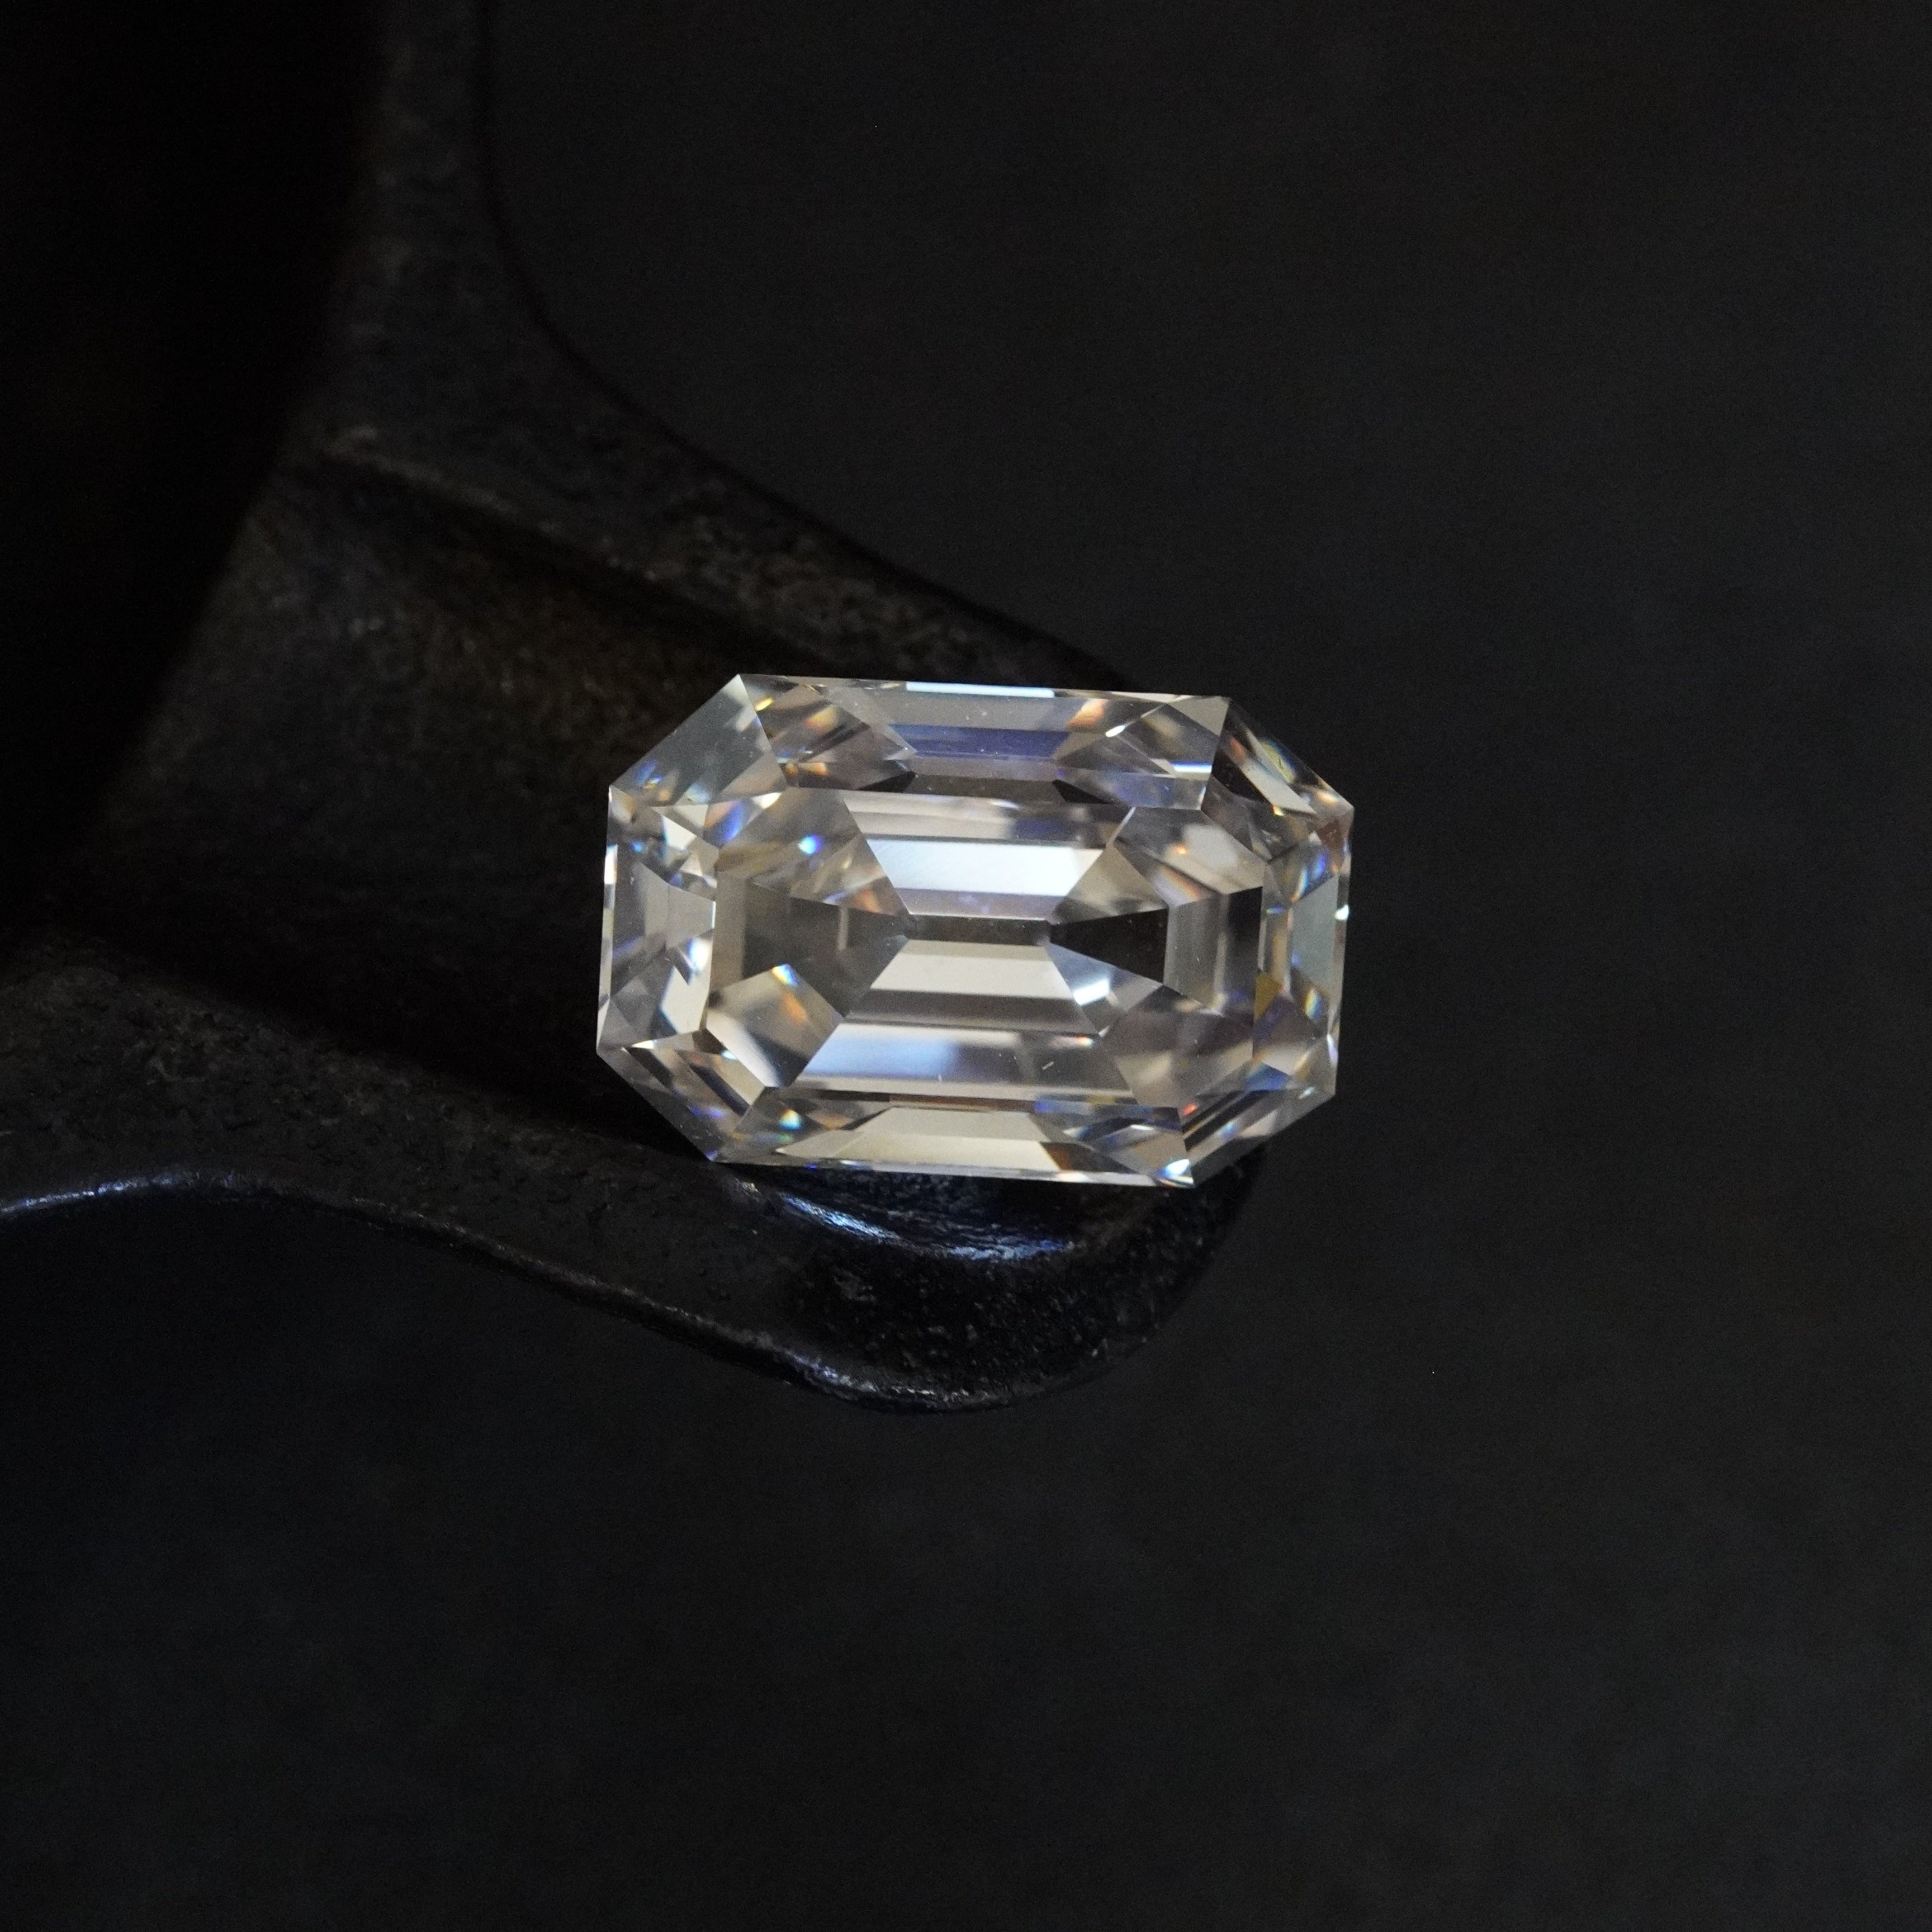 8.06 Carat Step Cut Diamond in Elegant Rose Gold Ring